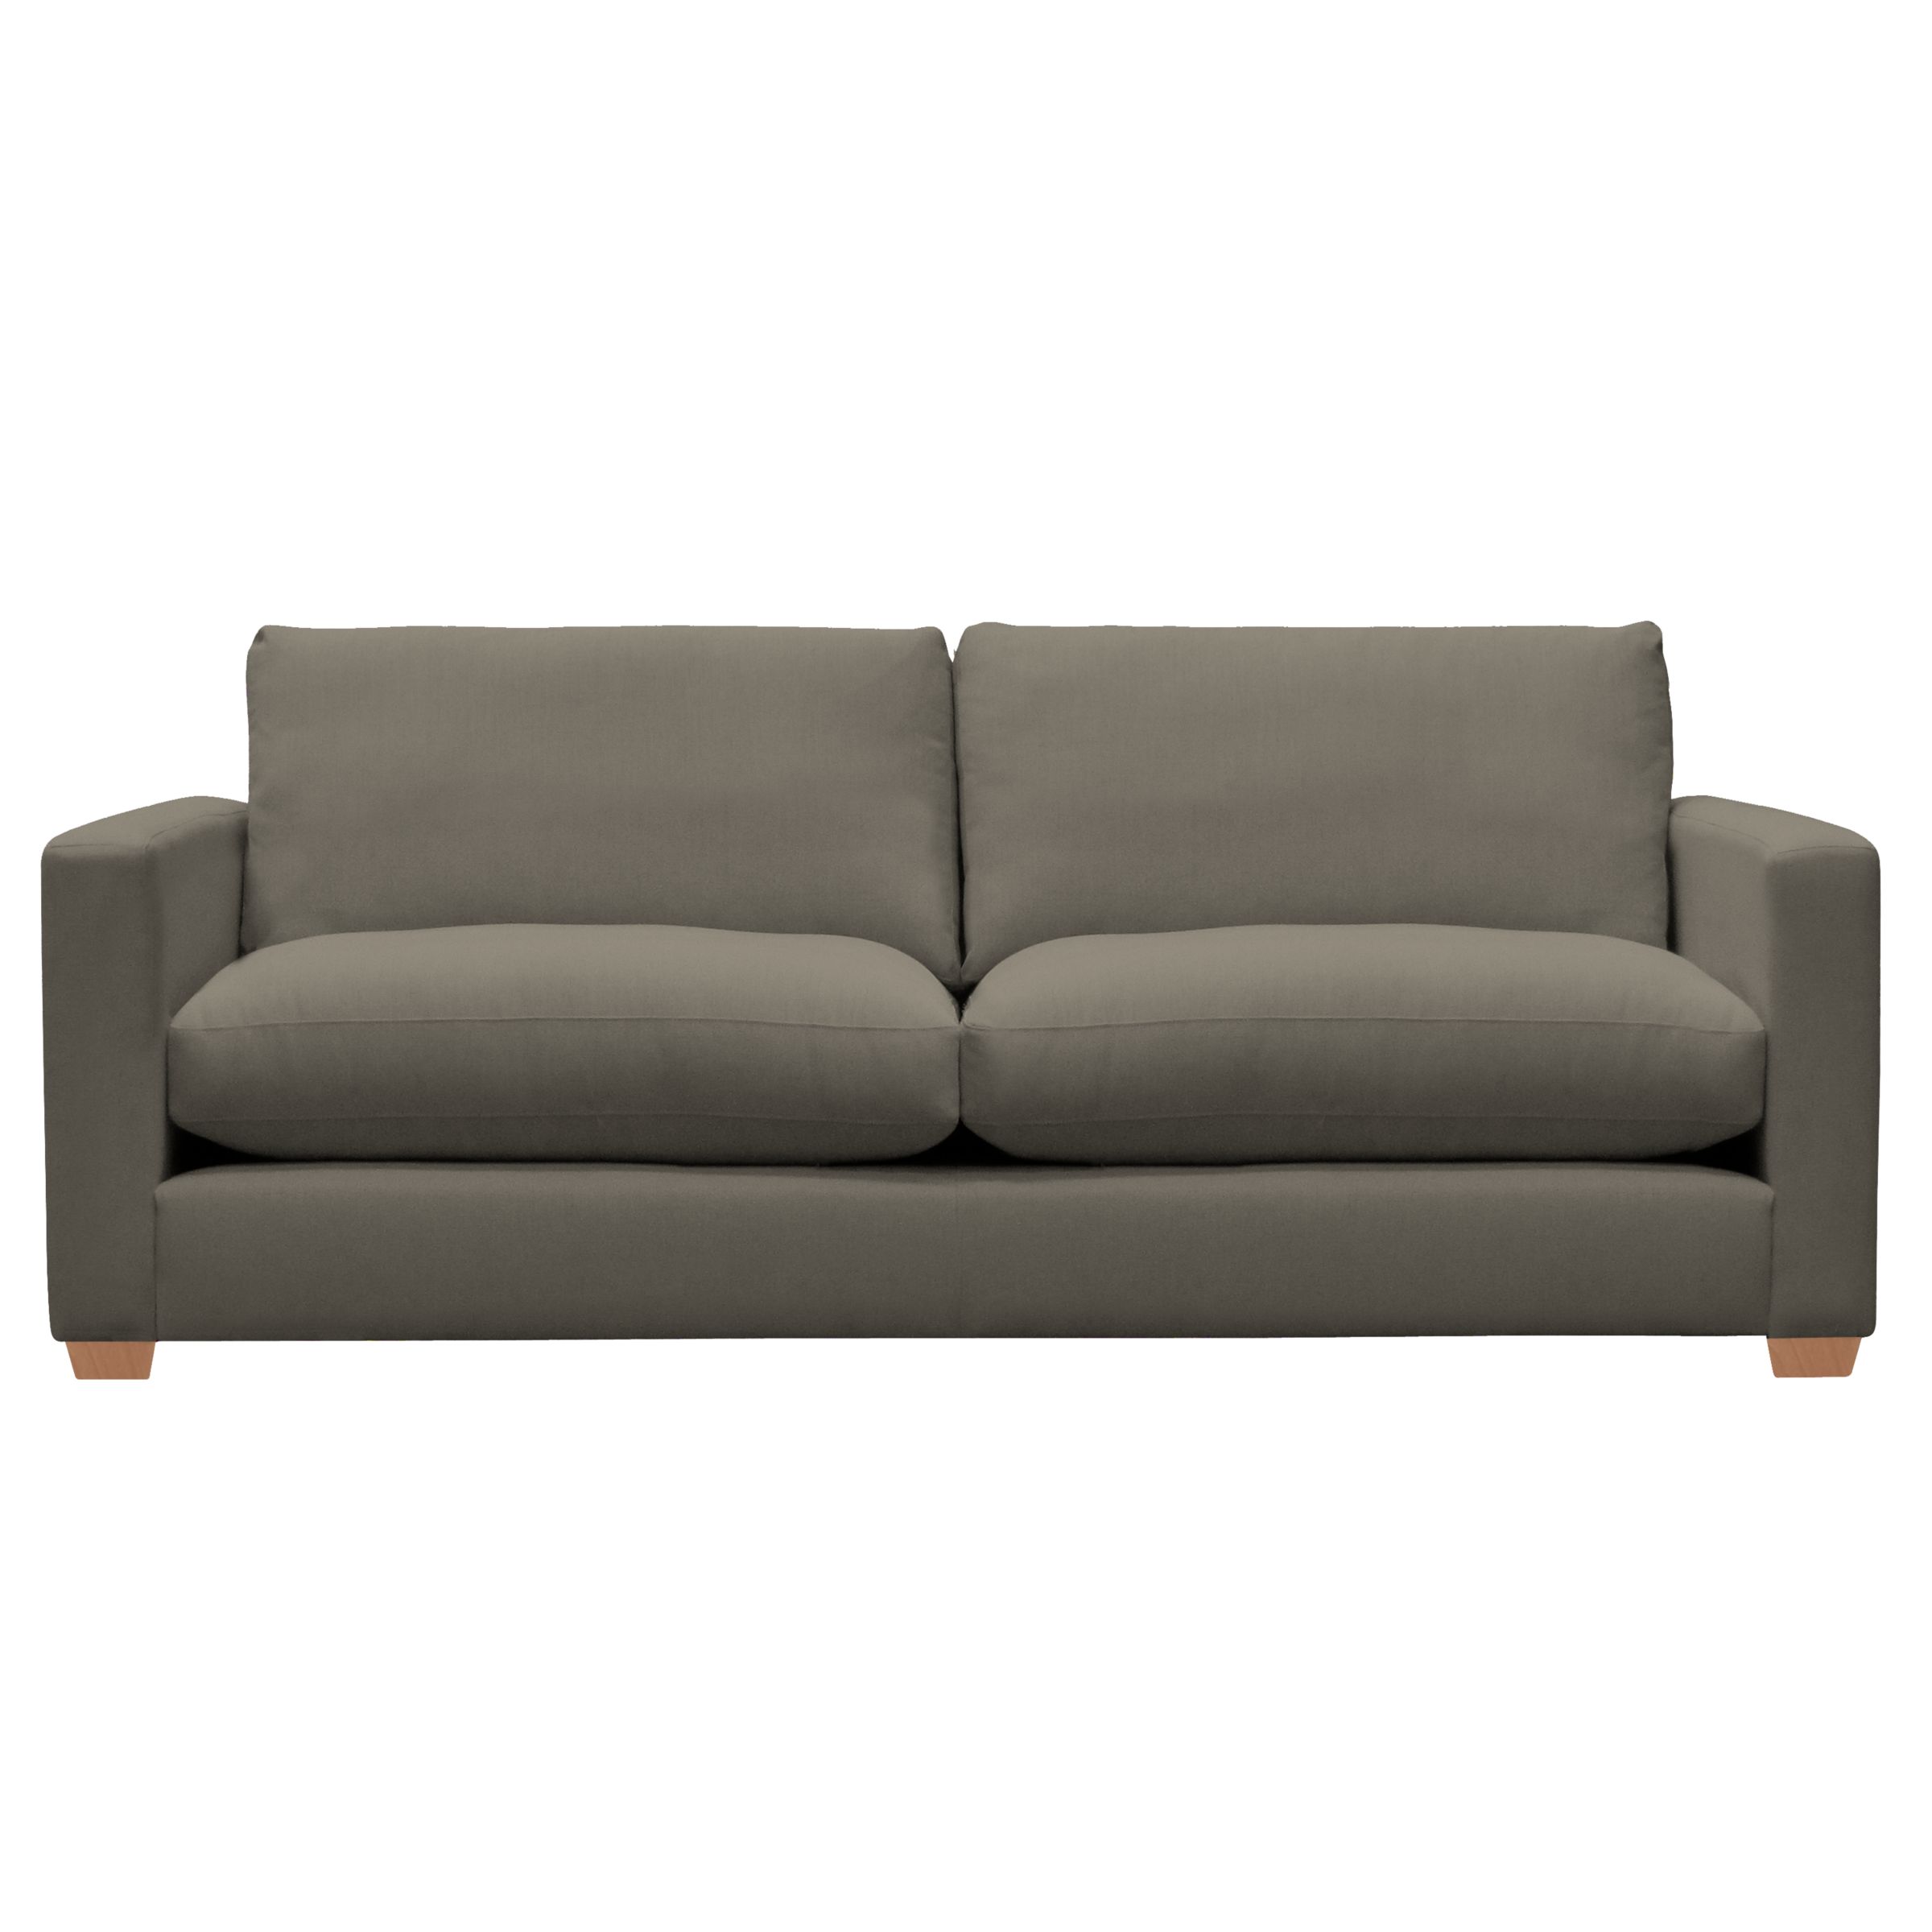 John Lewis Options Slim Arm Grand Sofa, Linley Slate, width 212cm